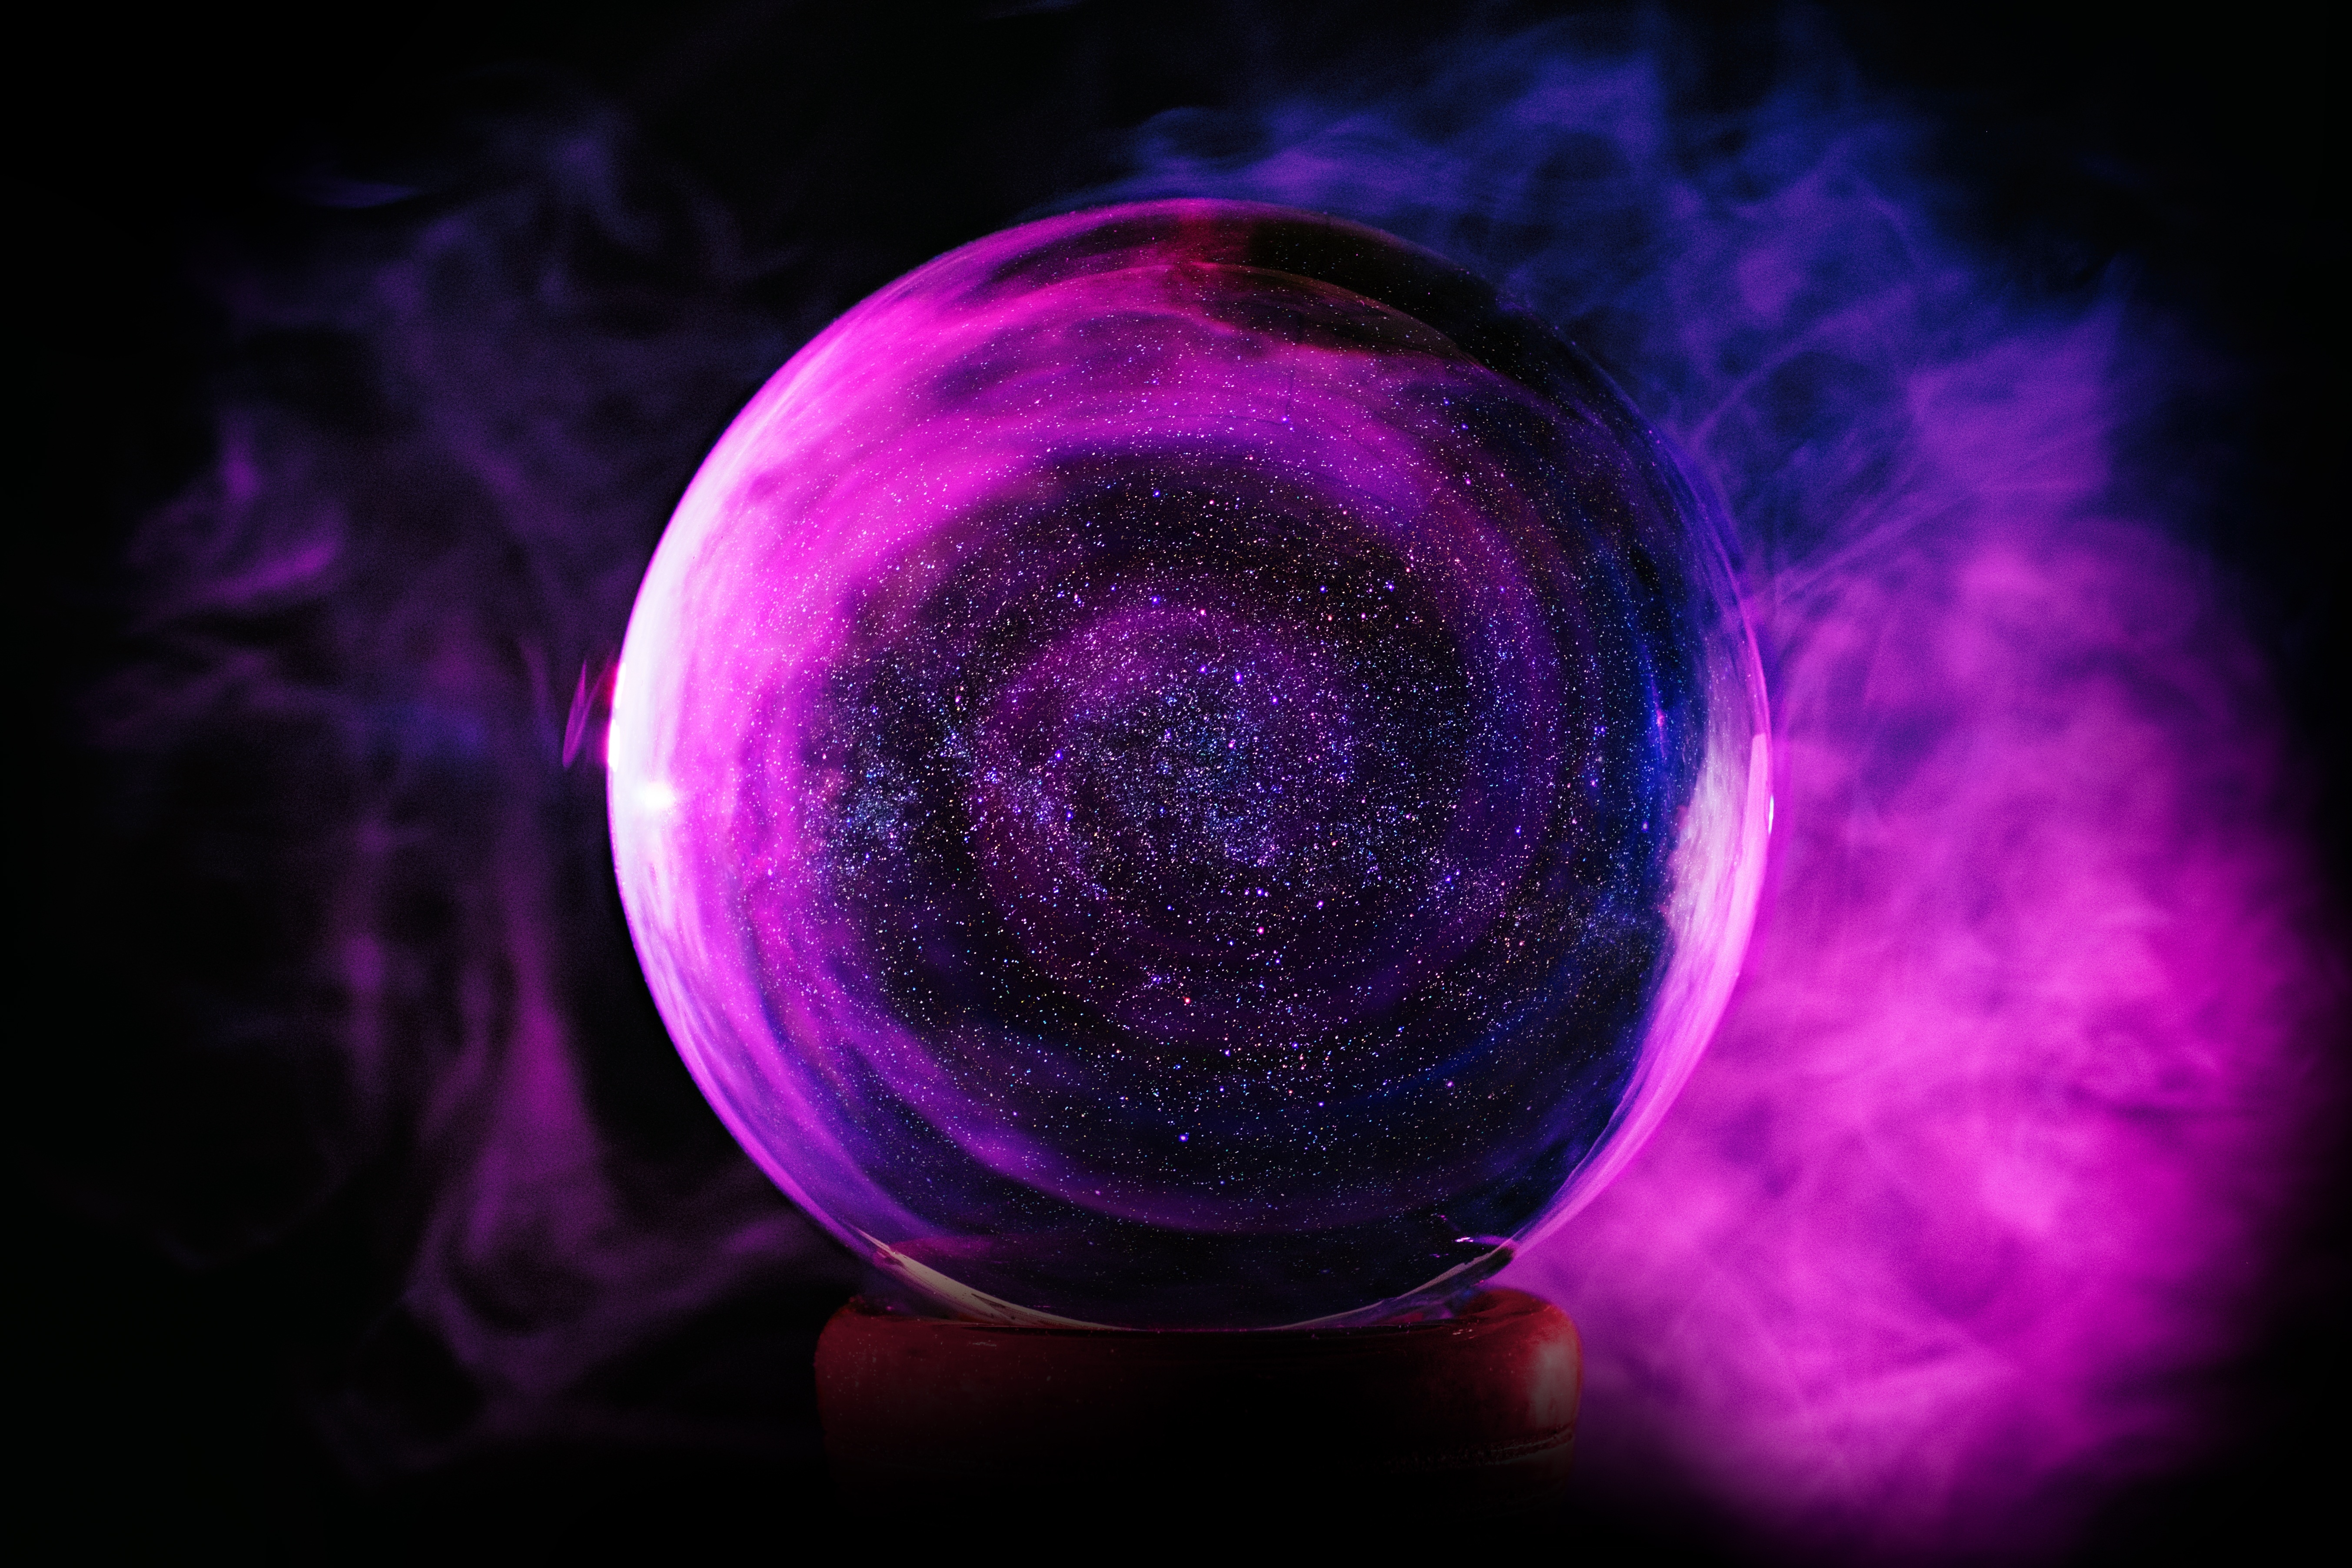 HD wallpaper, Purple Smoke, Crystal Ball, Glass Ball, Black Background, 5K, Sphere Balls